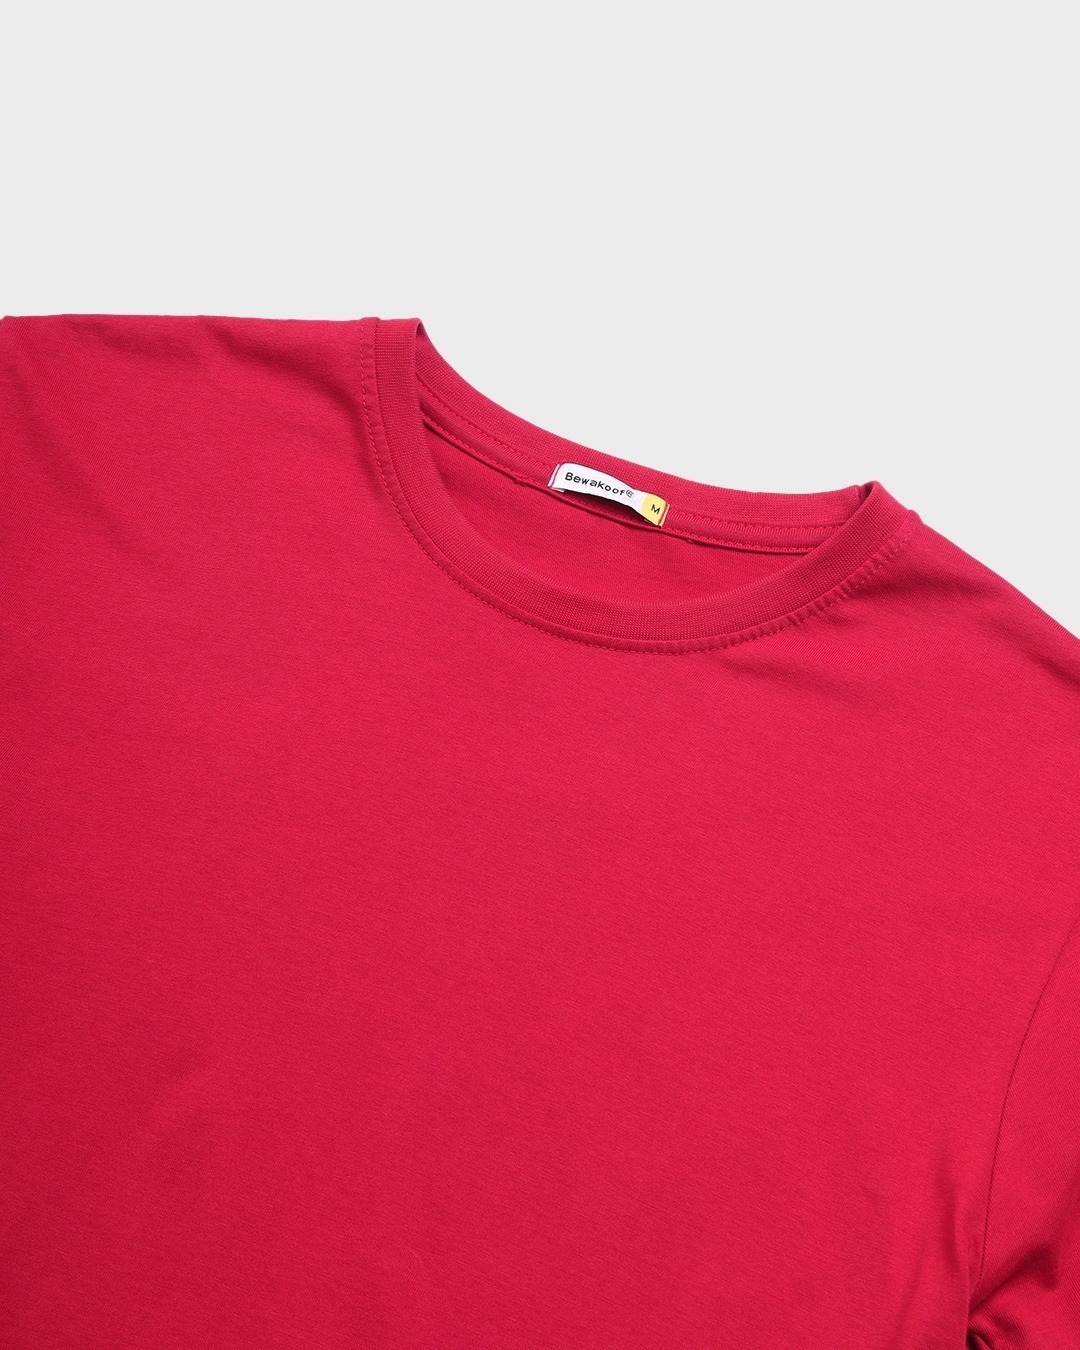 Shop Men's Red T-shirt